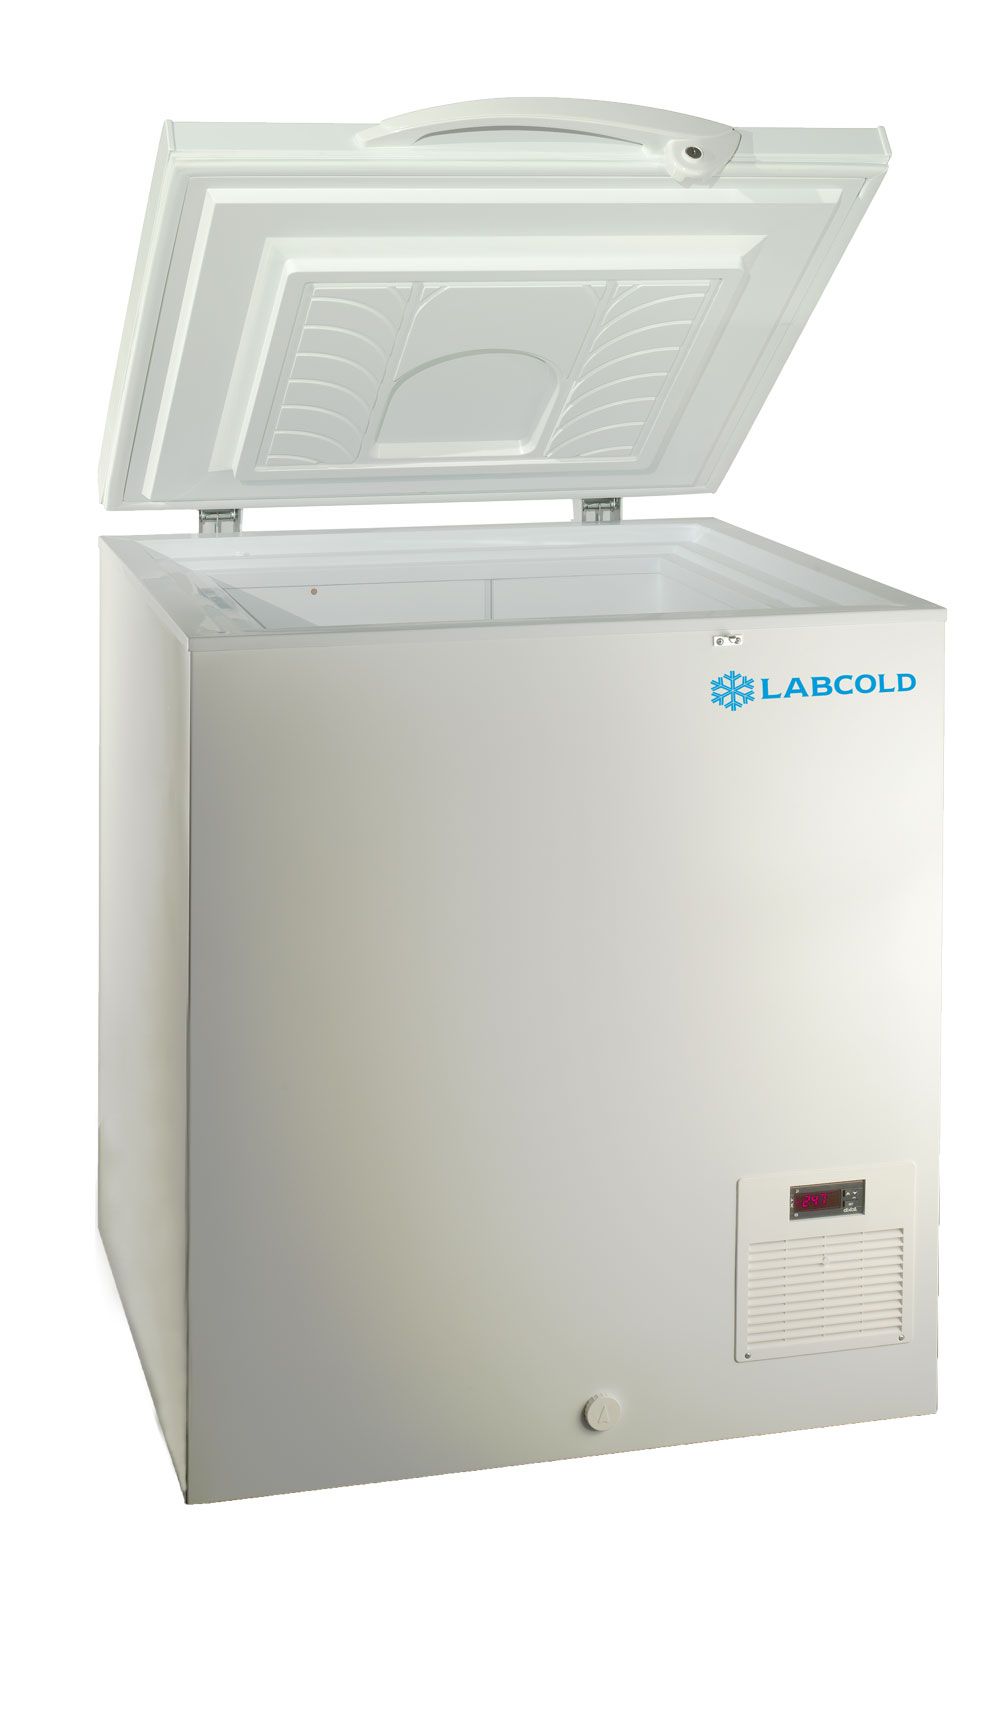 Labcold ULTF130 Ultra Low-Temperature Spark Free  Chest Freezer,  -65 to -85ºC Temperature Range, 130 Litres Capacity